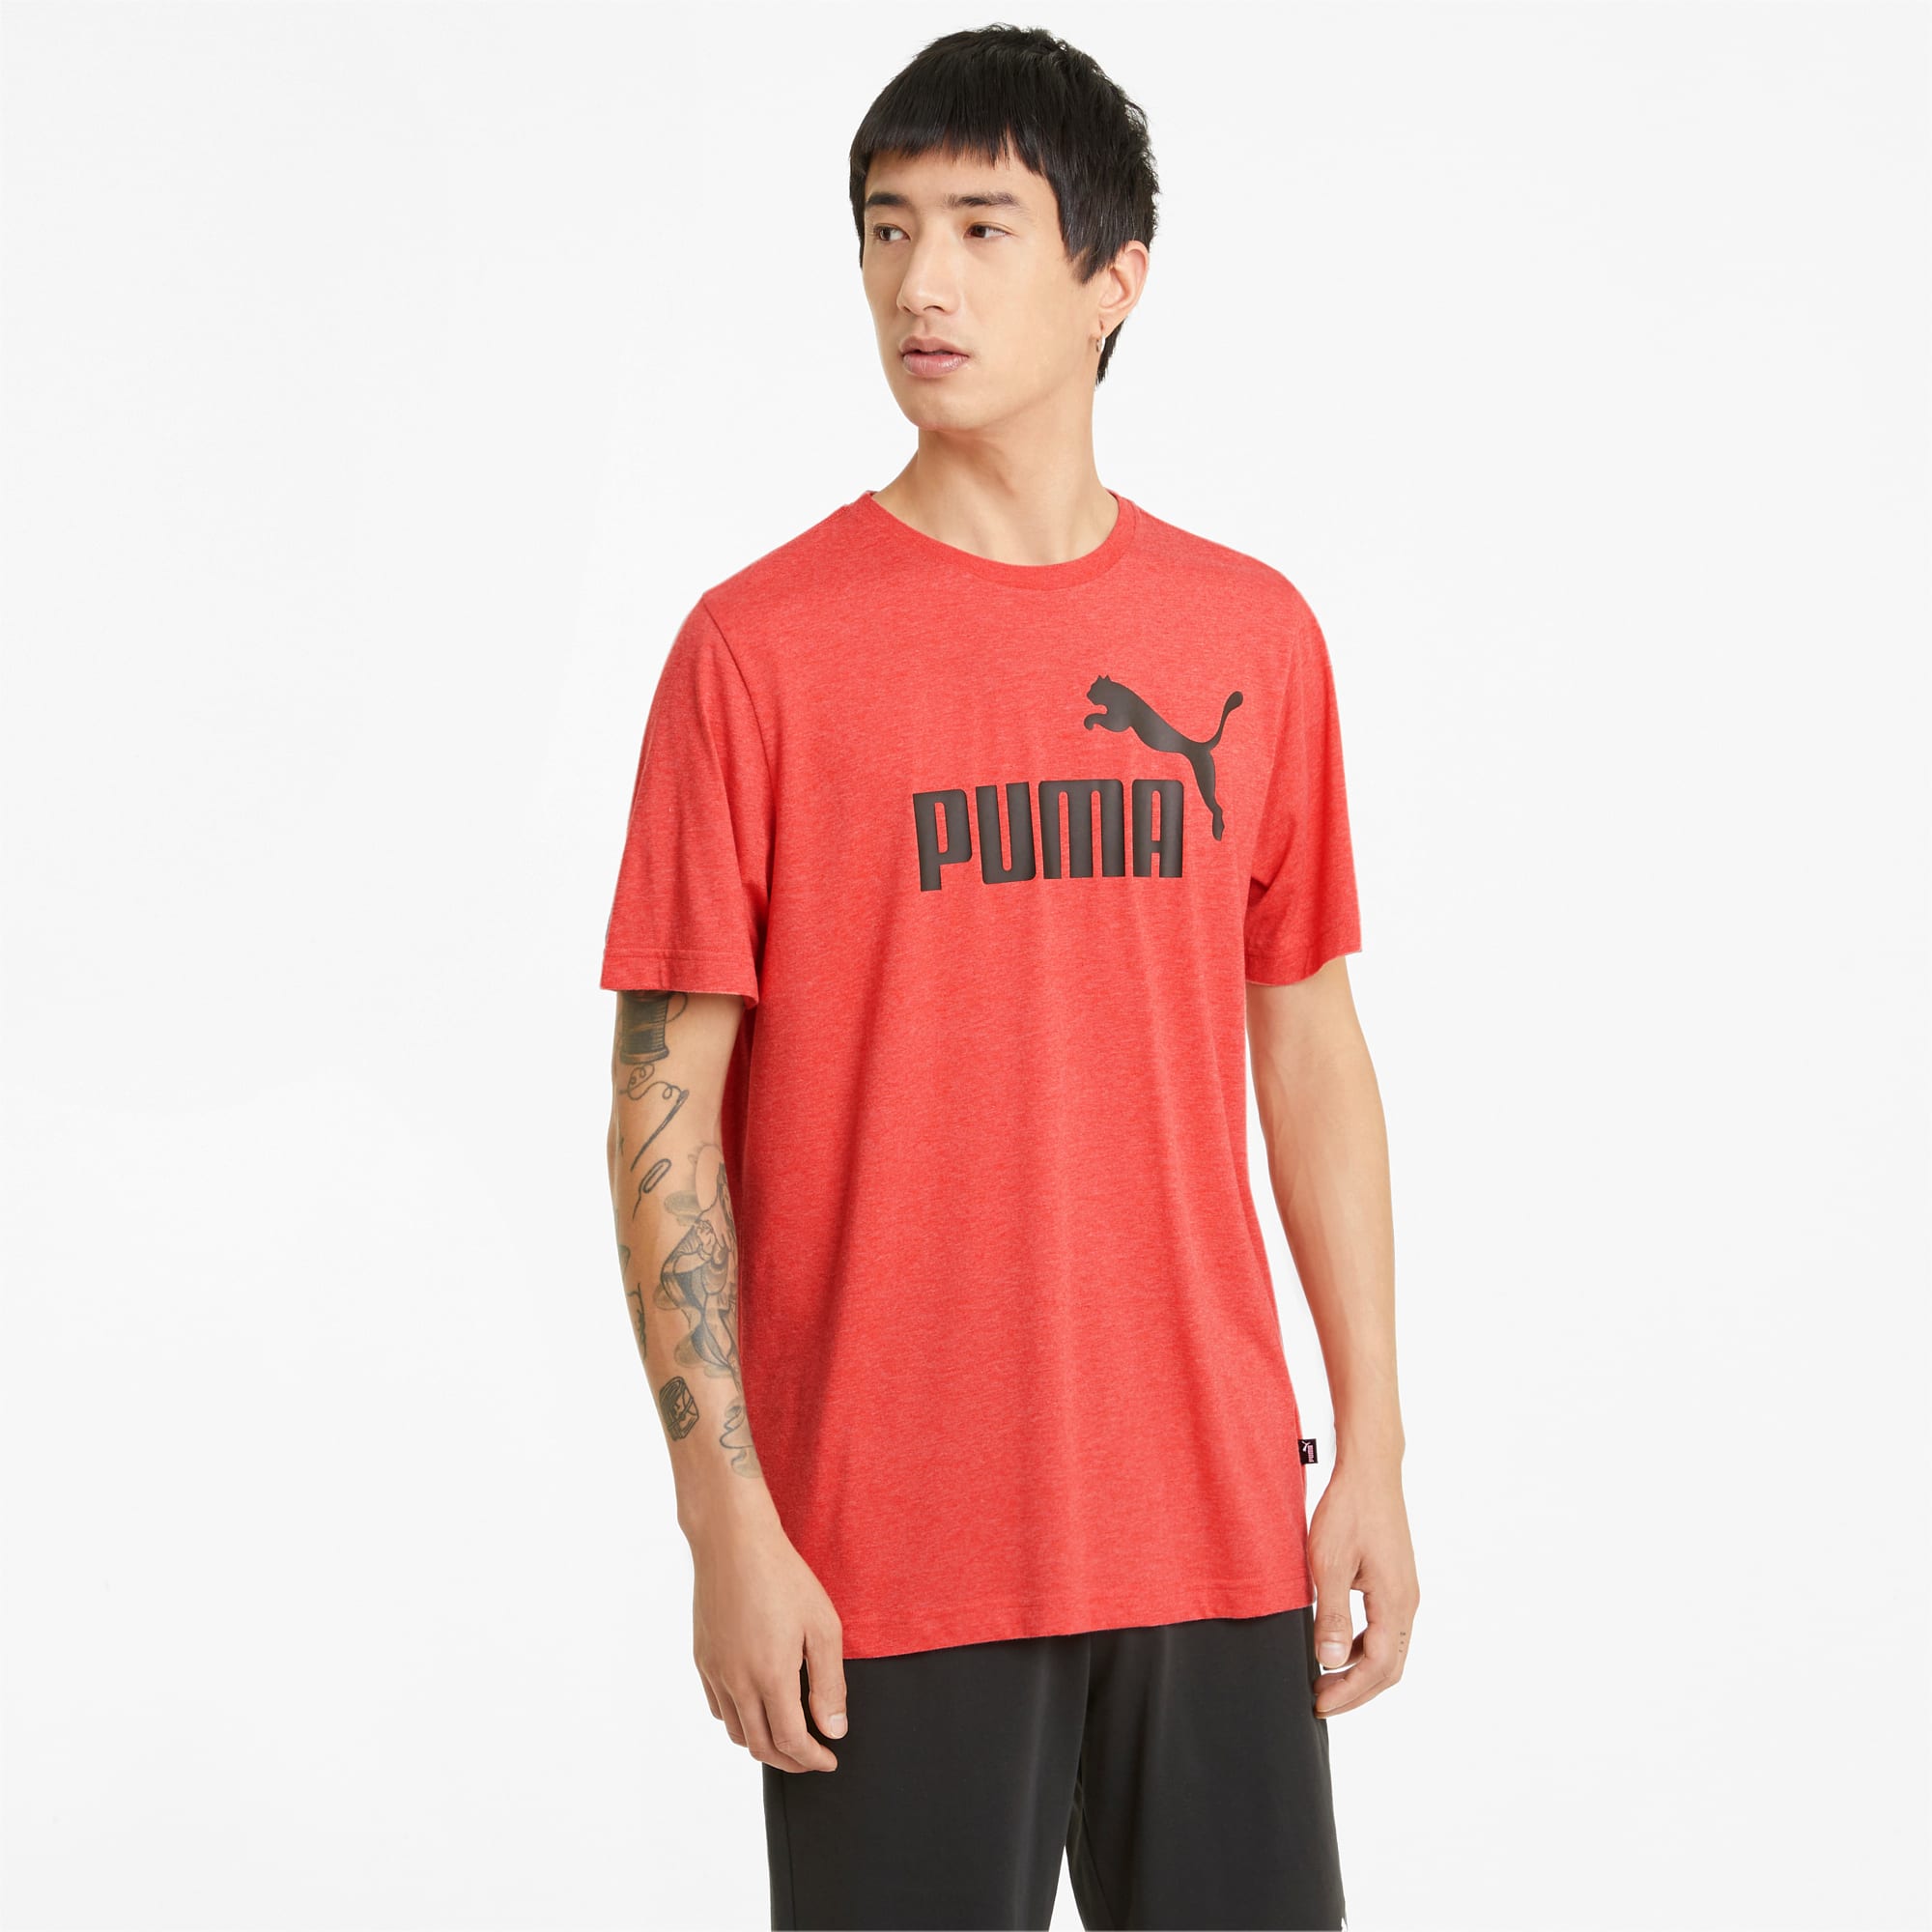 PUMA Essentials Heather Men's T-Shirt, High Risk Red, Size 3XL, Clothing